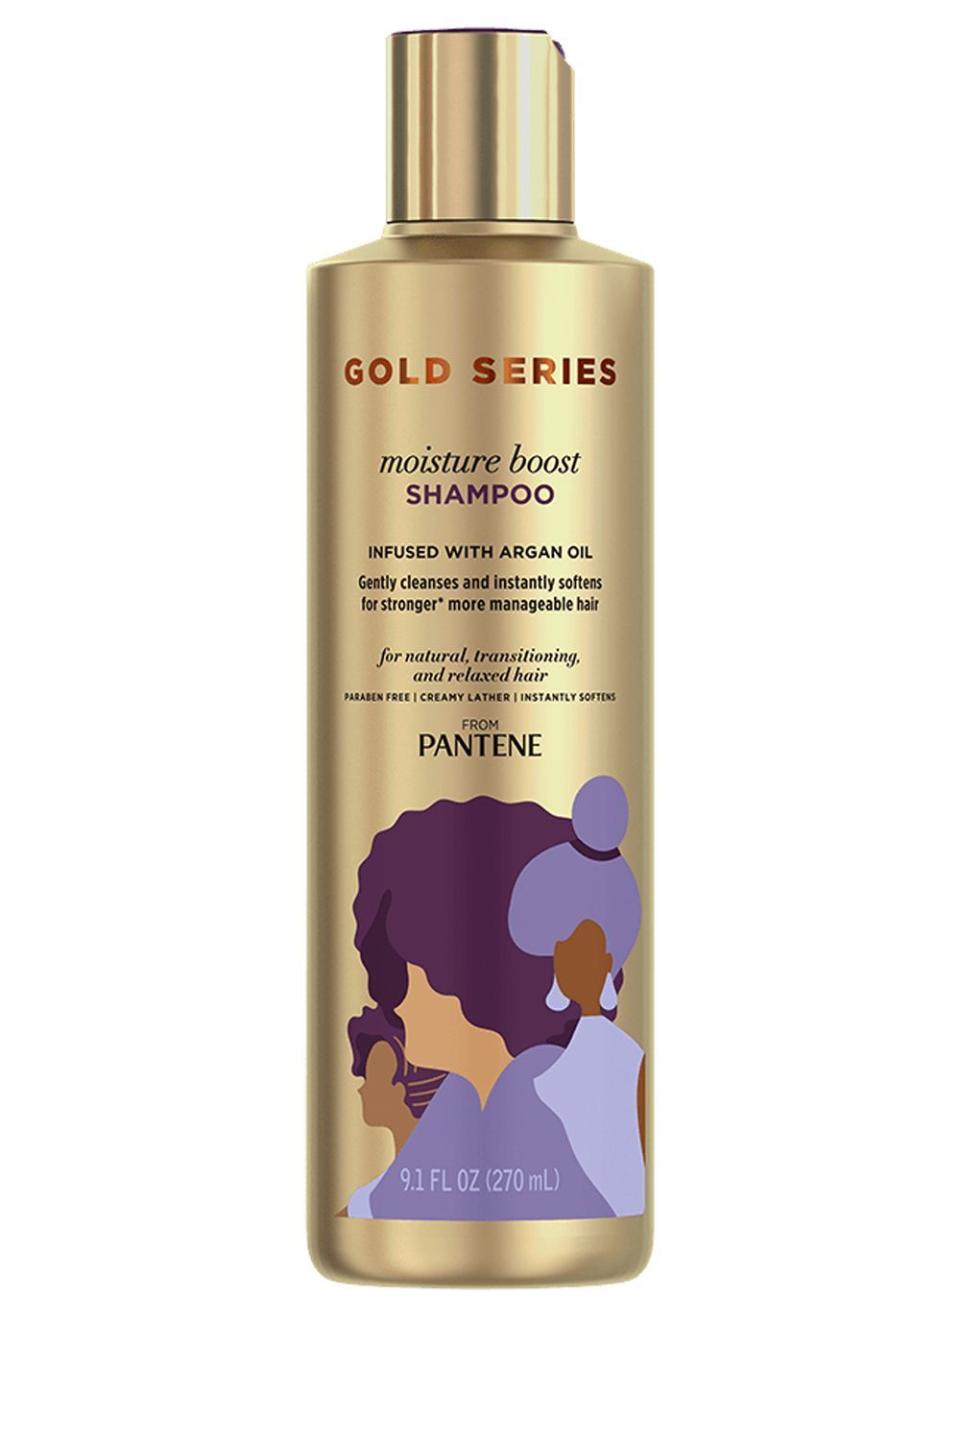 9) Pantene Gold Series Moisture Boost Shampoo